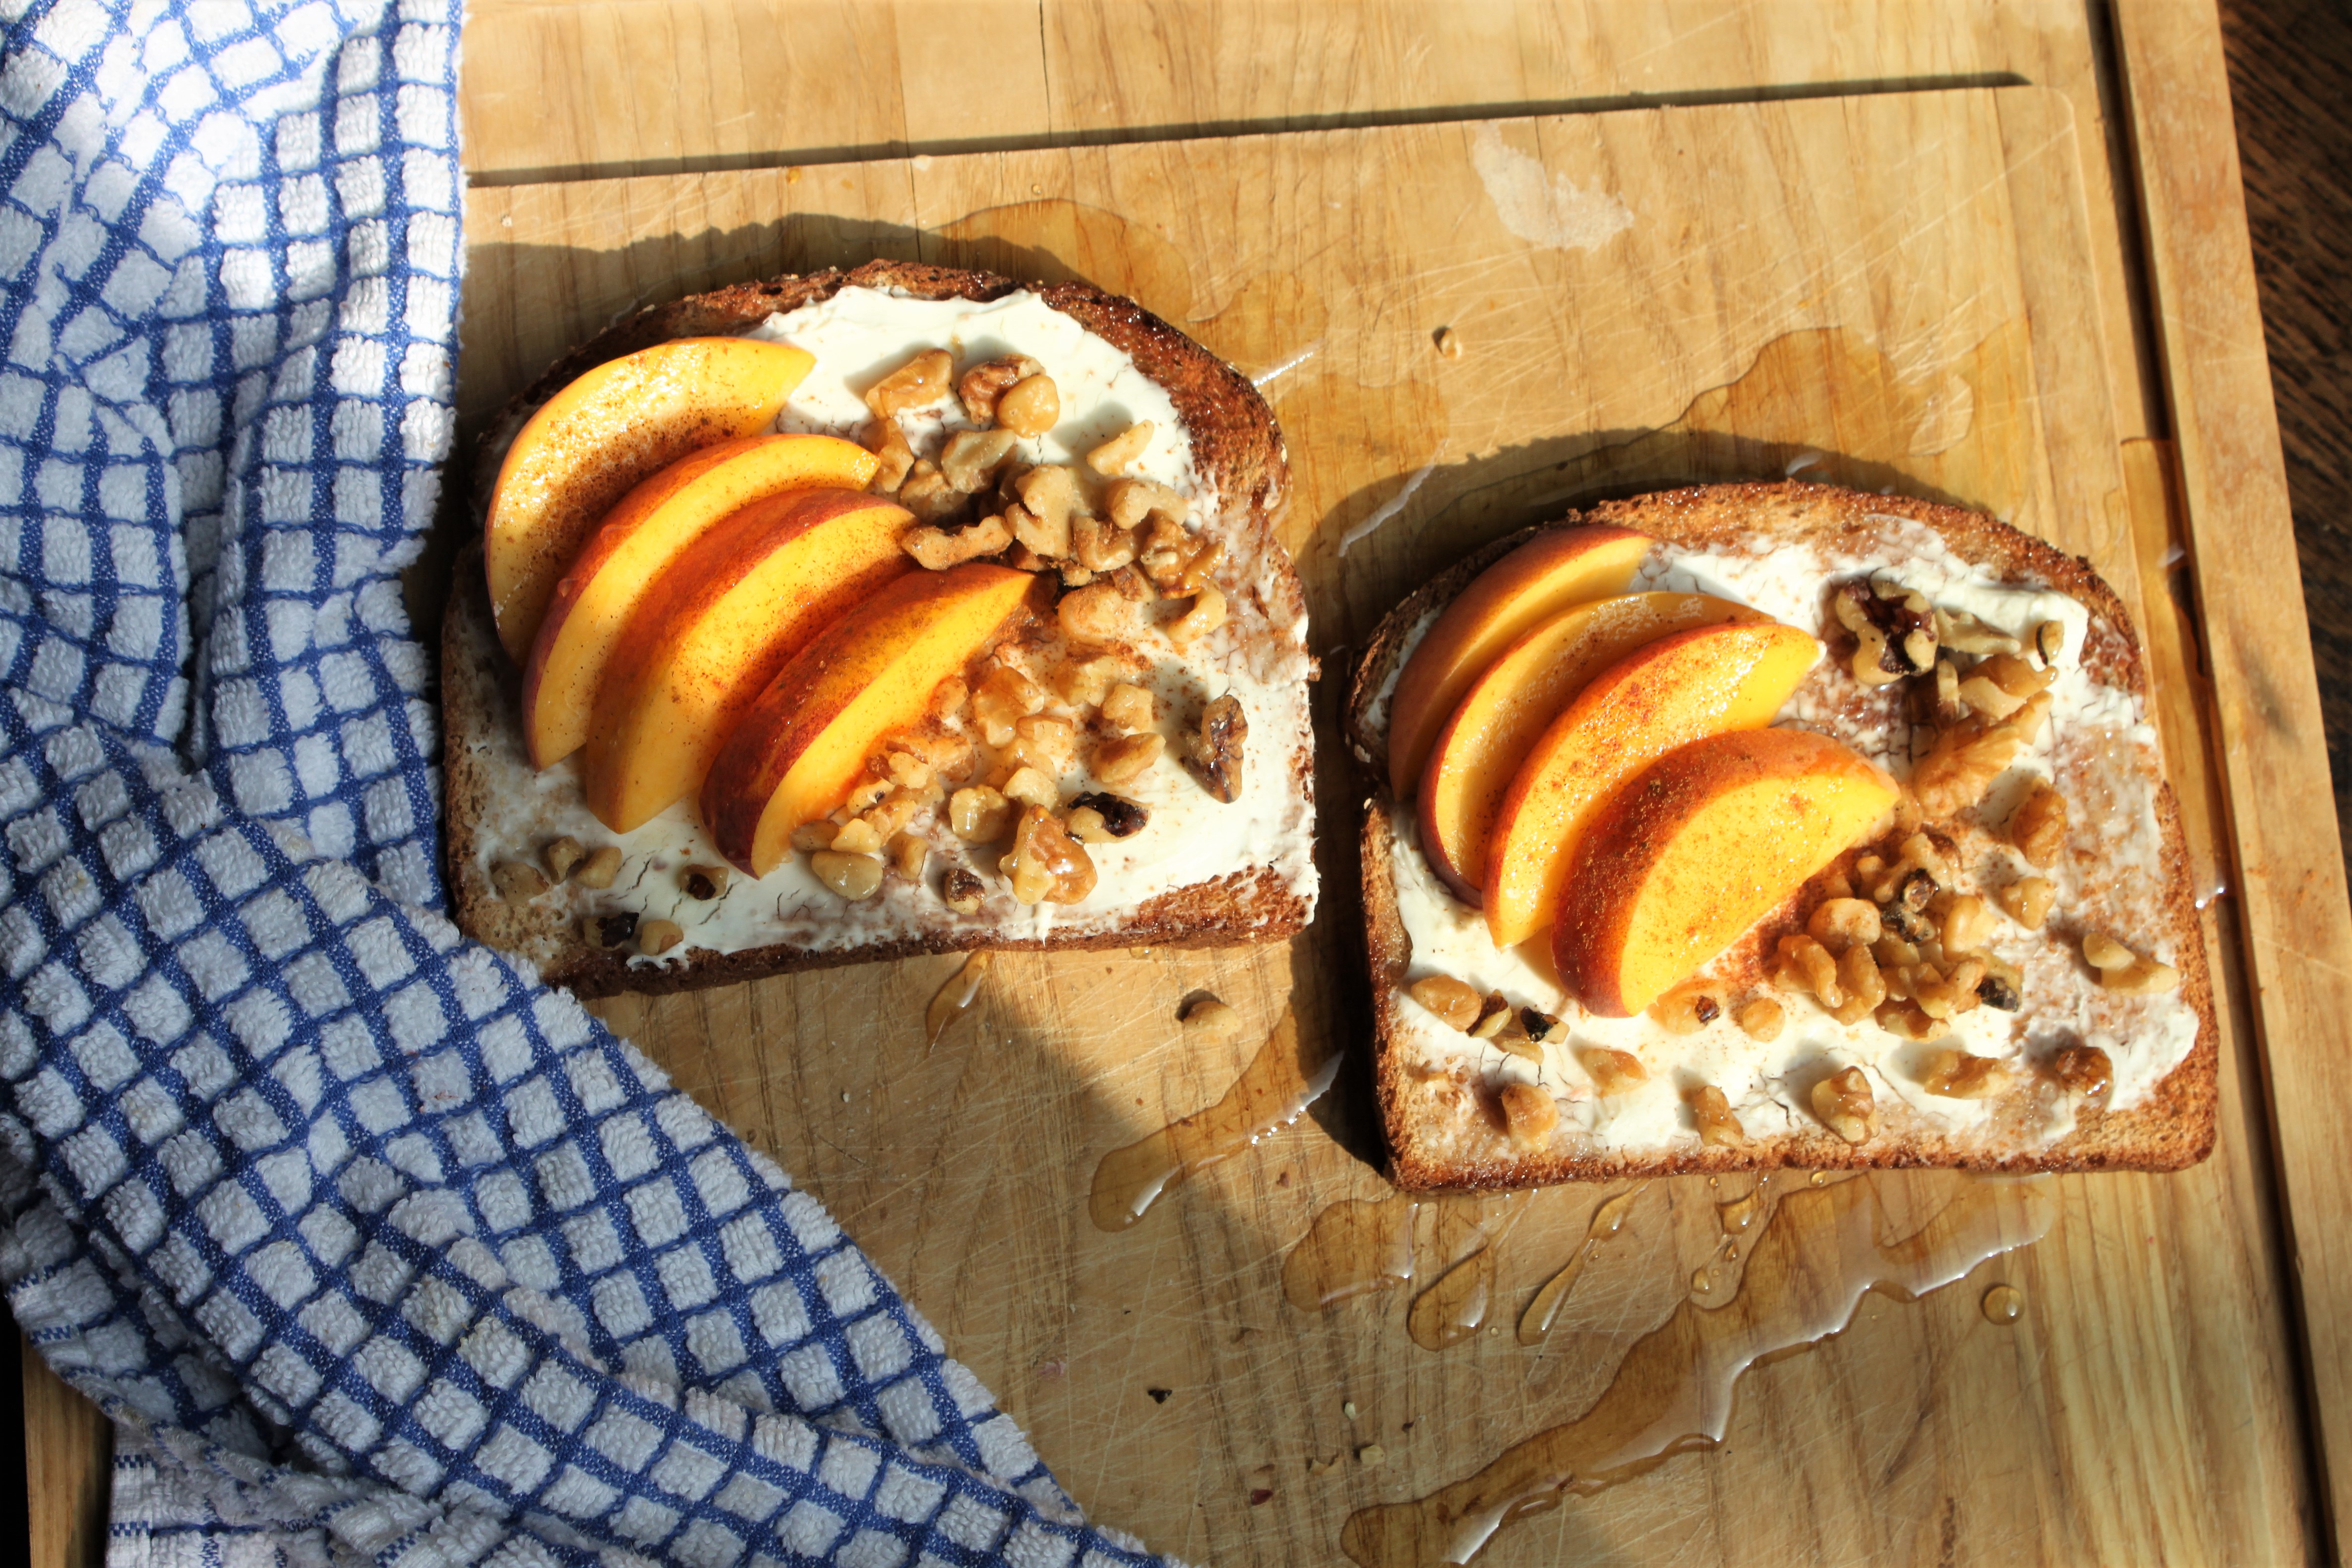 Philadelphia Cream Cheese peaches and cream cheese toast is a great alternative to avo toast